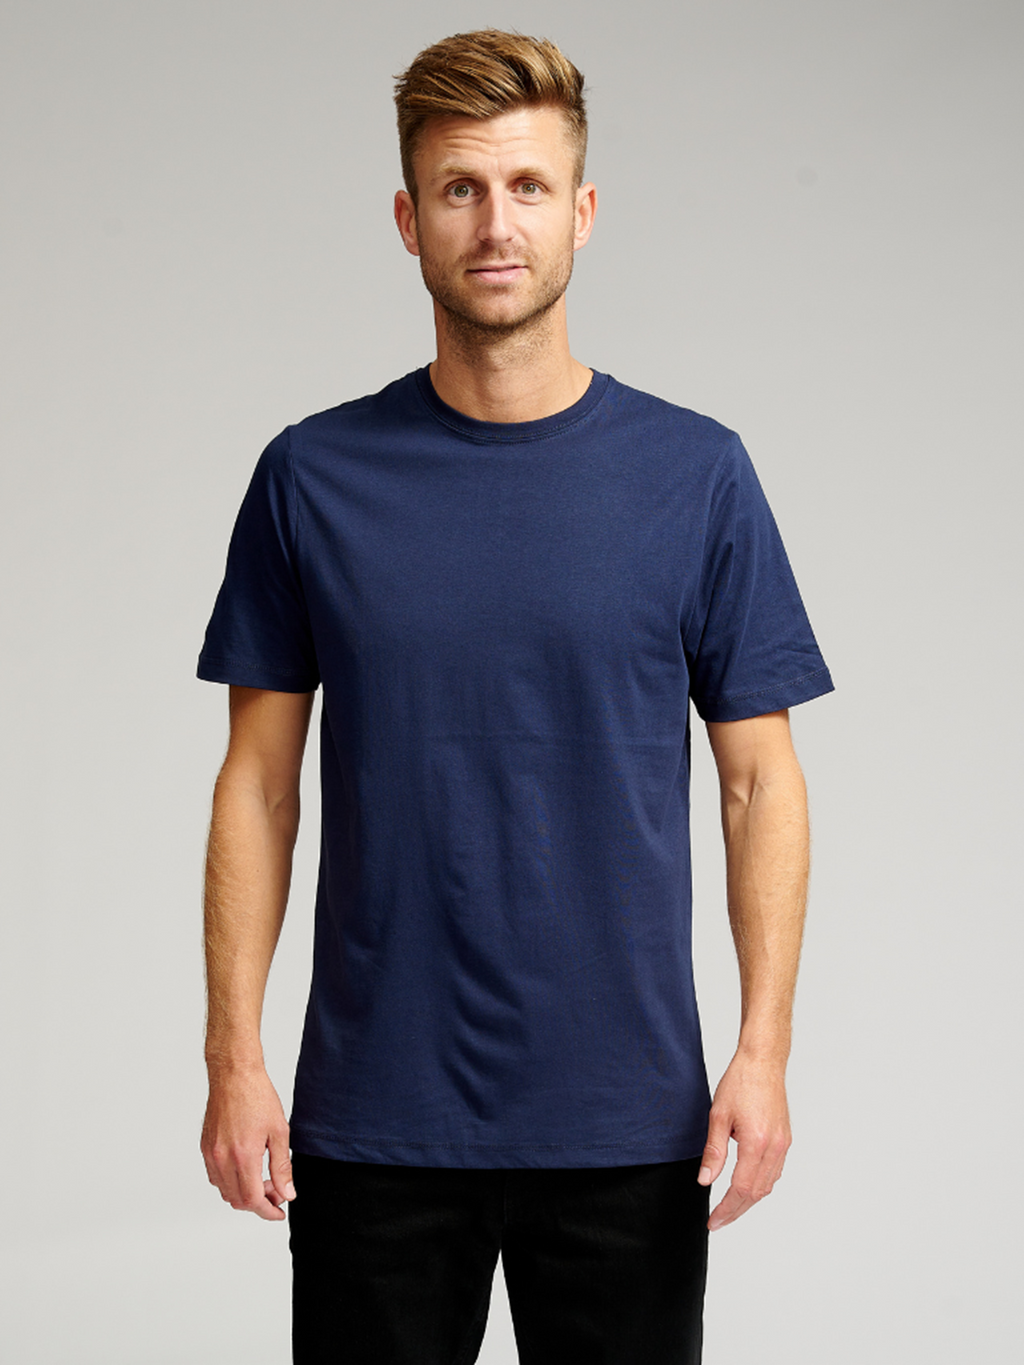 Organic Basic T-shirts - Package Deal (4 pcs.)